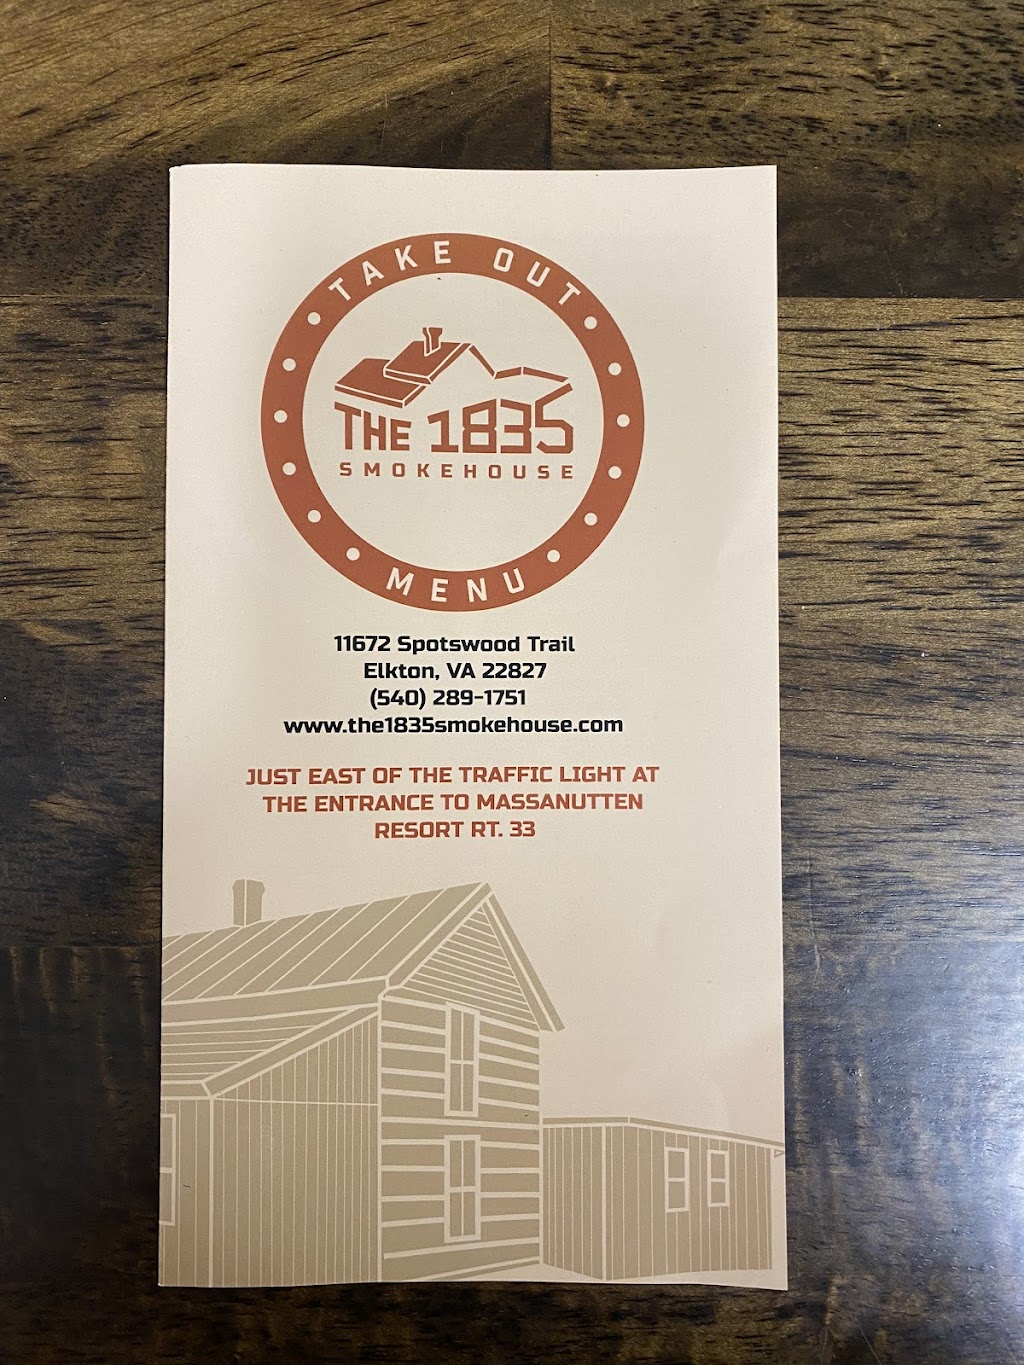 The 1835 Smokehouse | restaurant | 11672 Spotswood Trail, Elkton, VA 22827, USA | 5402891751 OR +1 540-289-1751